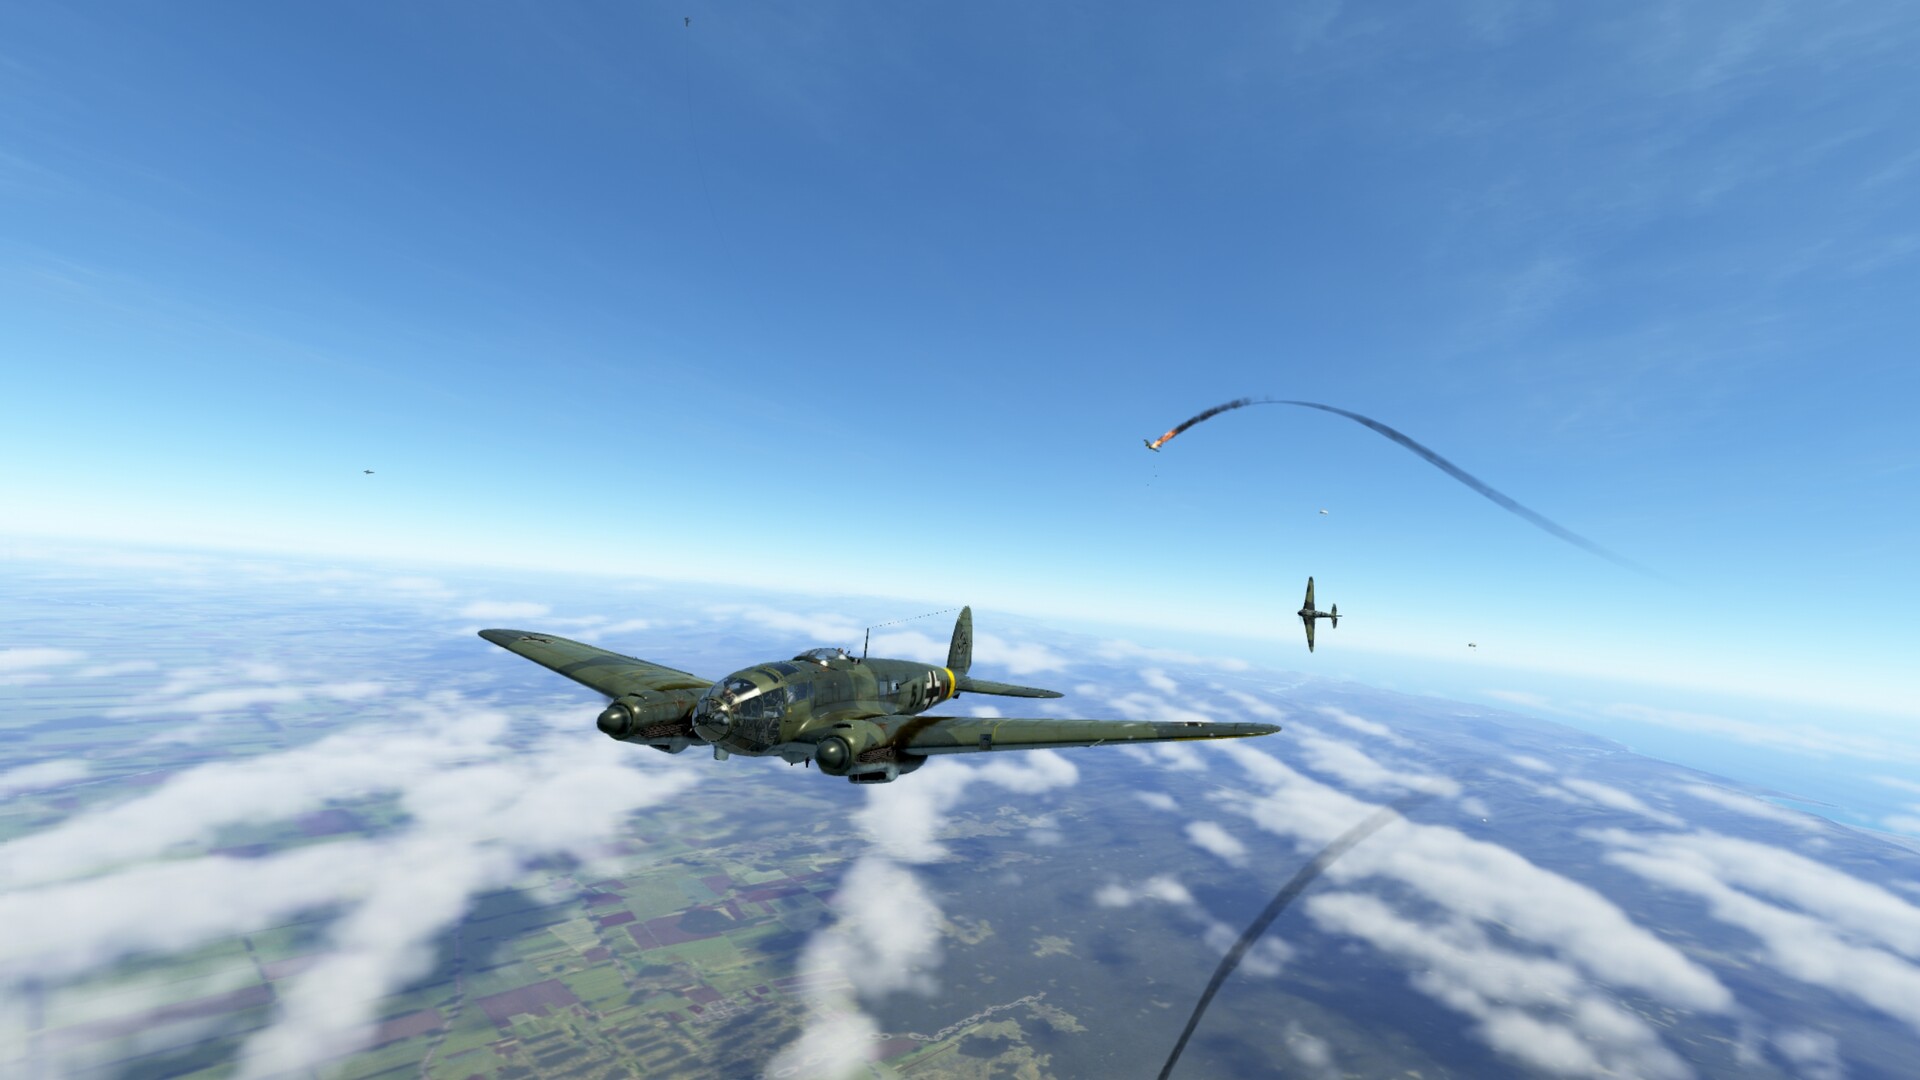 Save 50% on IL-2 Sturmovik: Achtung Spitfire! Campaign on Steam